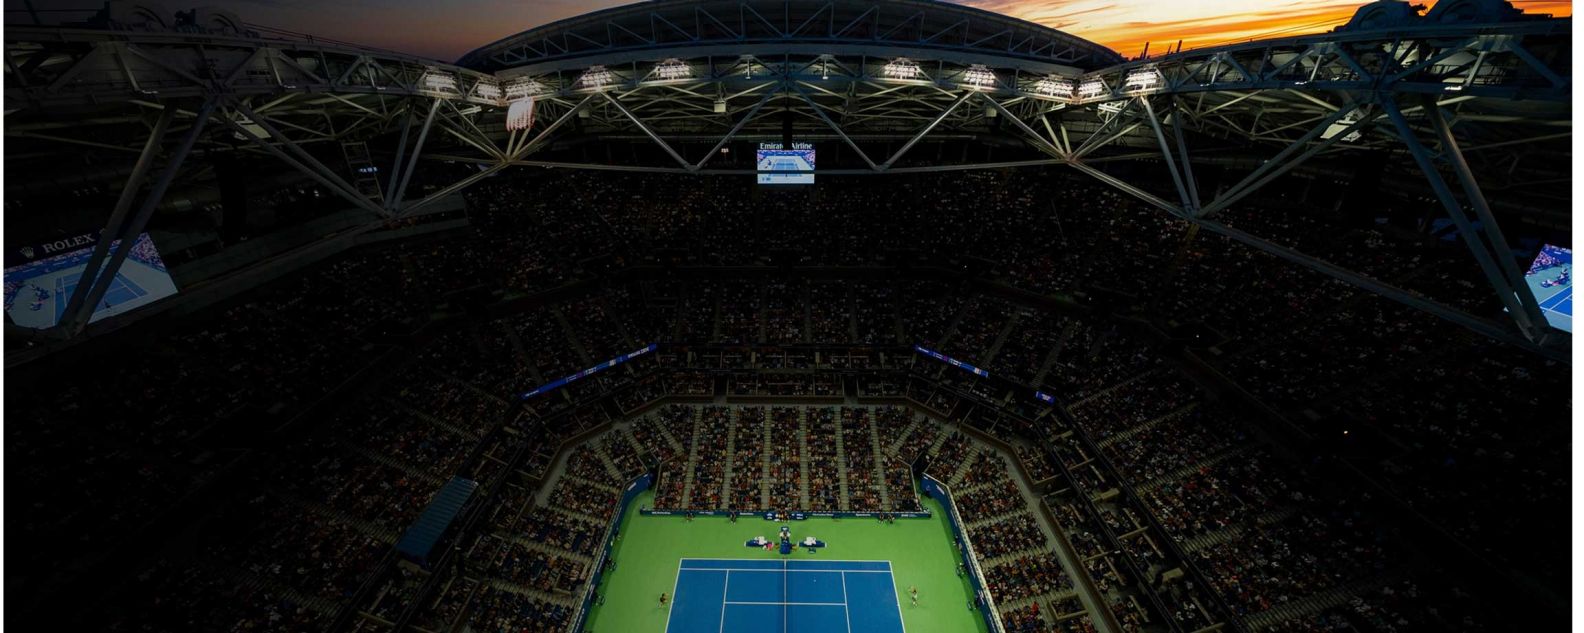 US Open 2023 ao vivo: onde assistir ao último Grand Slam do ano